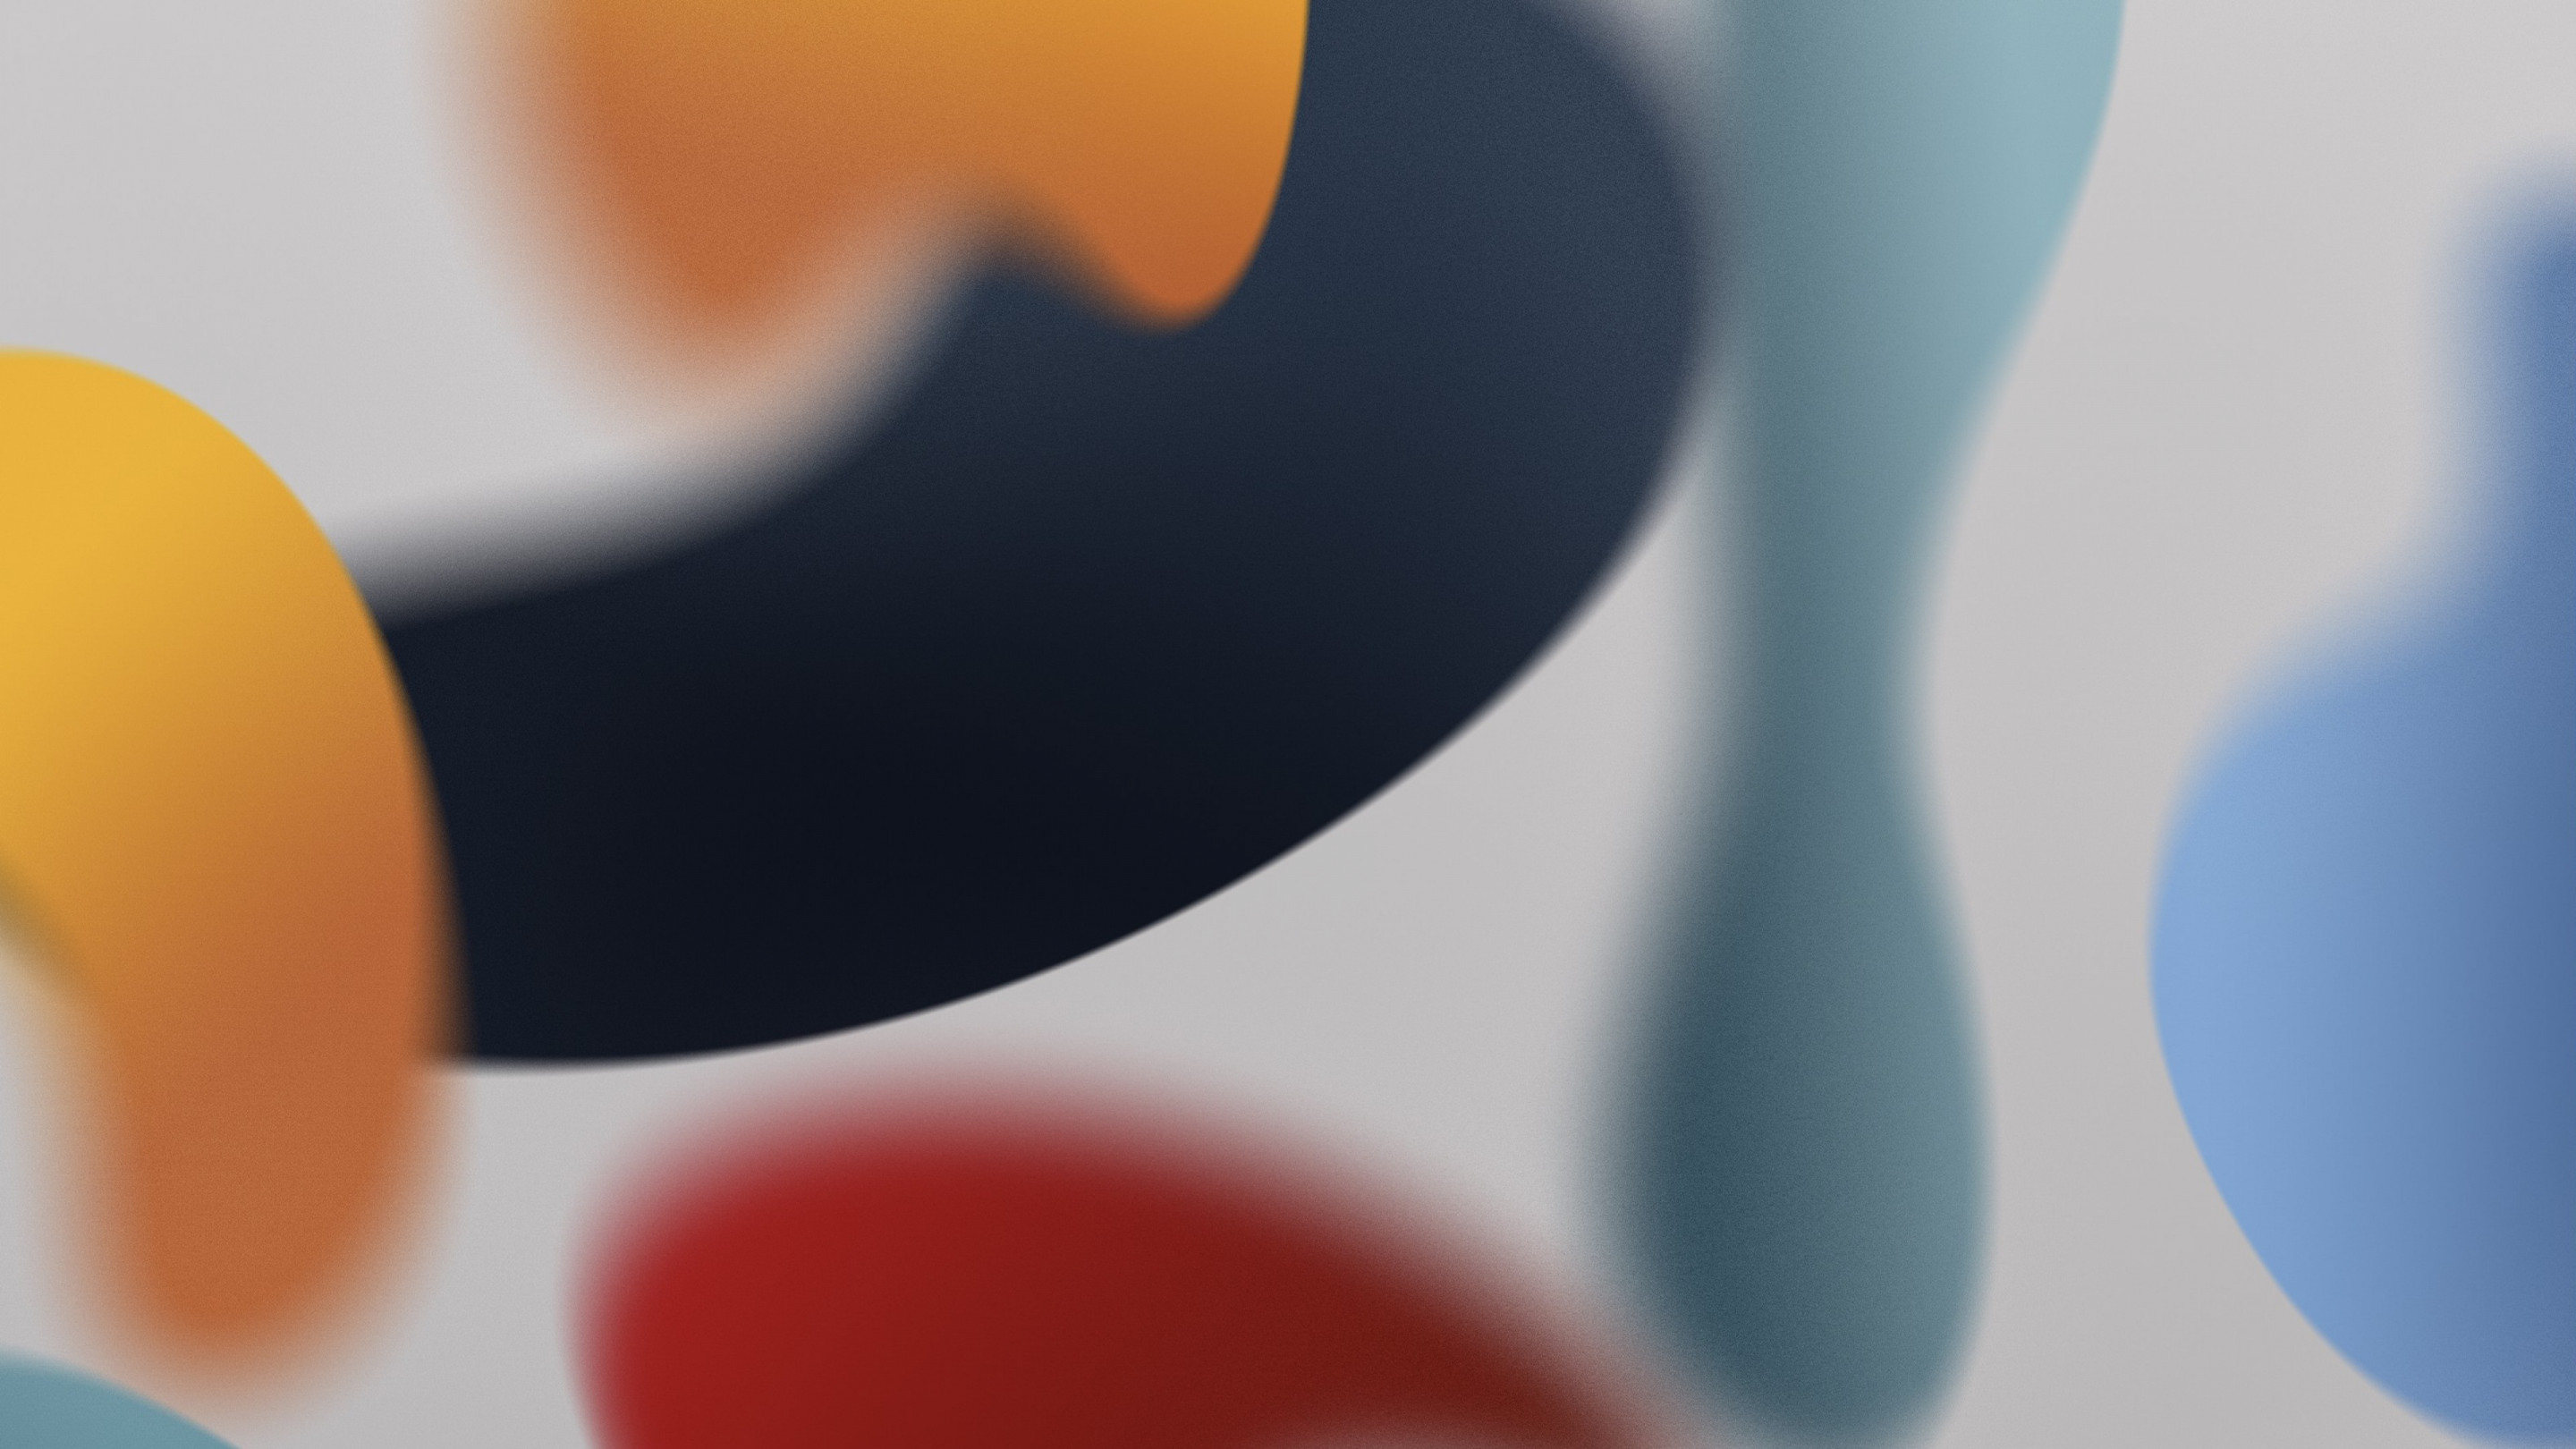 Abstract iOS 15 wallpaper 2880x1620